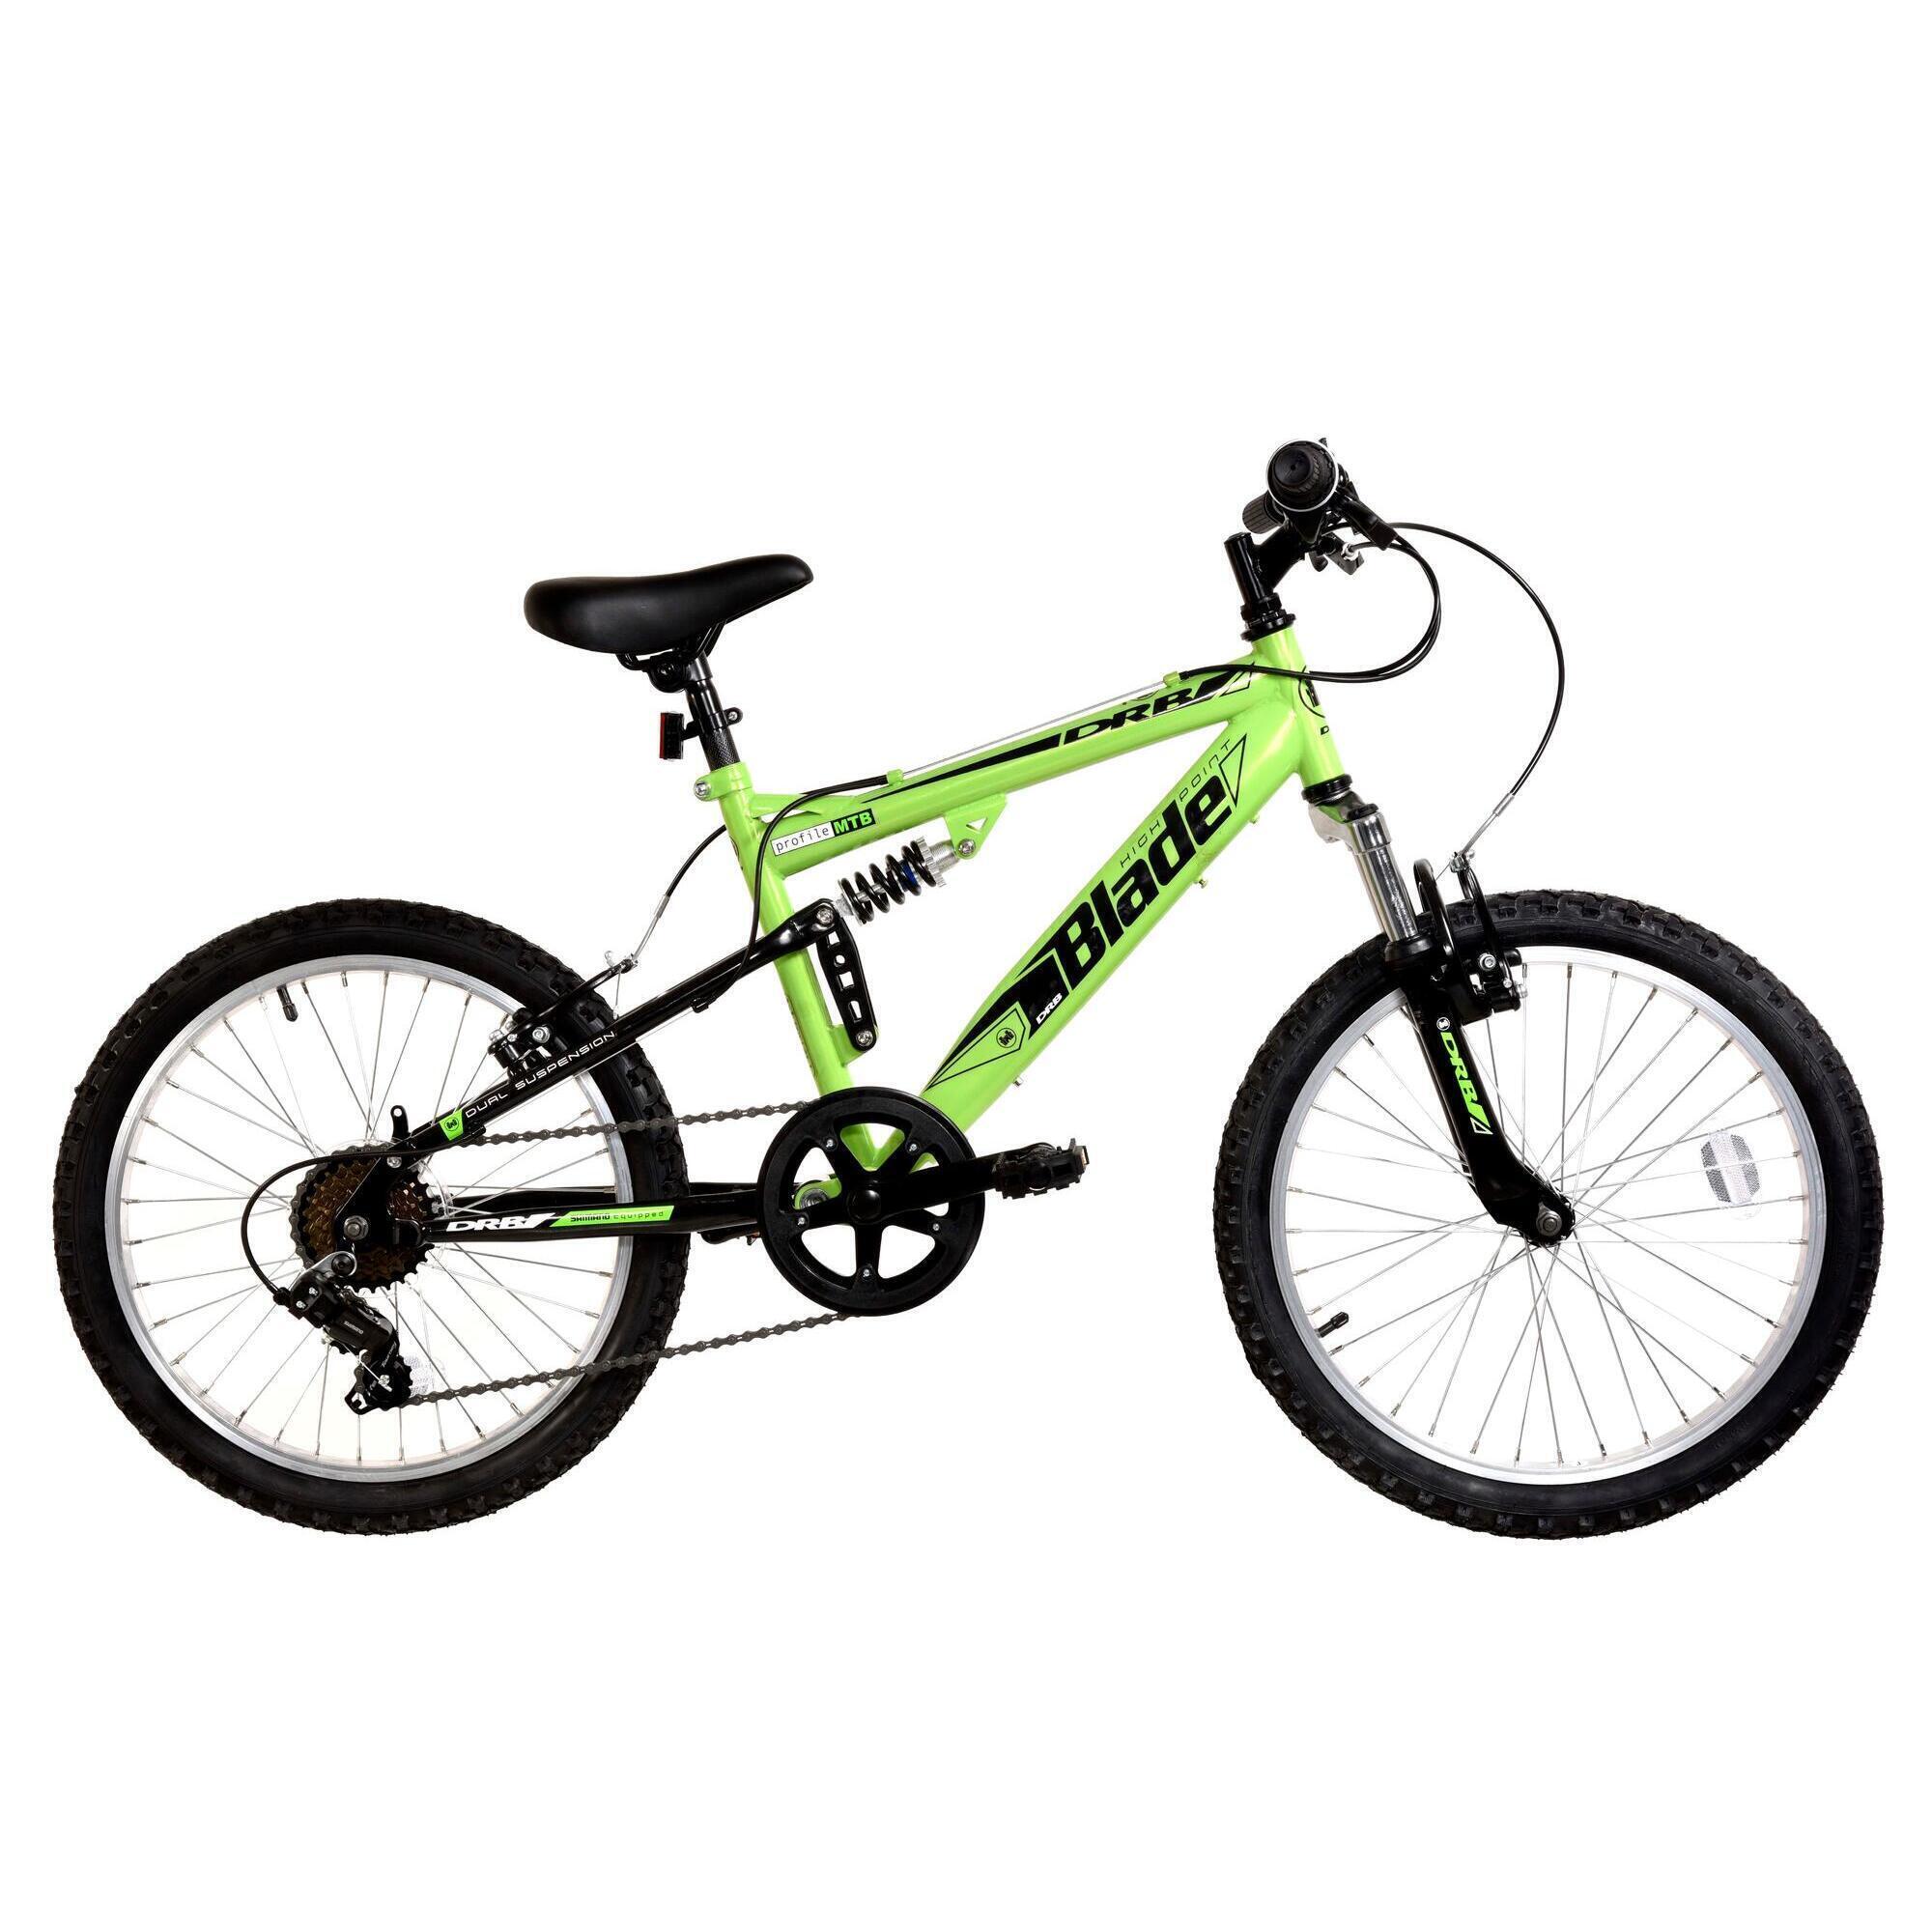 Dallingridge Blade Junior Full Sus Mountain Bike, 20In Wheel - Lime Green 1/1